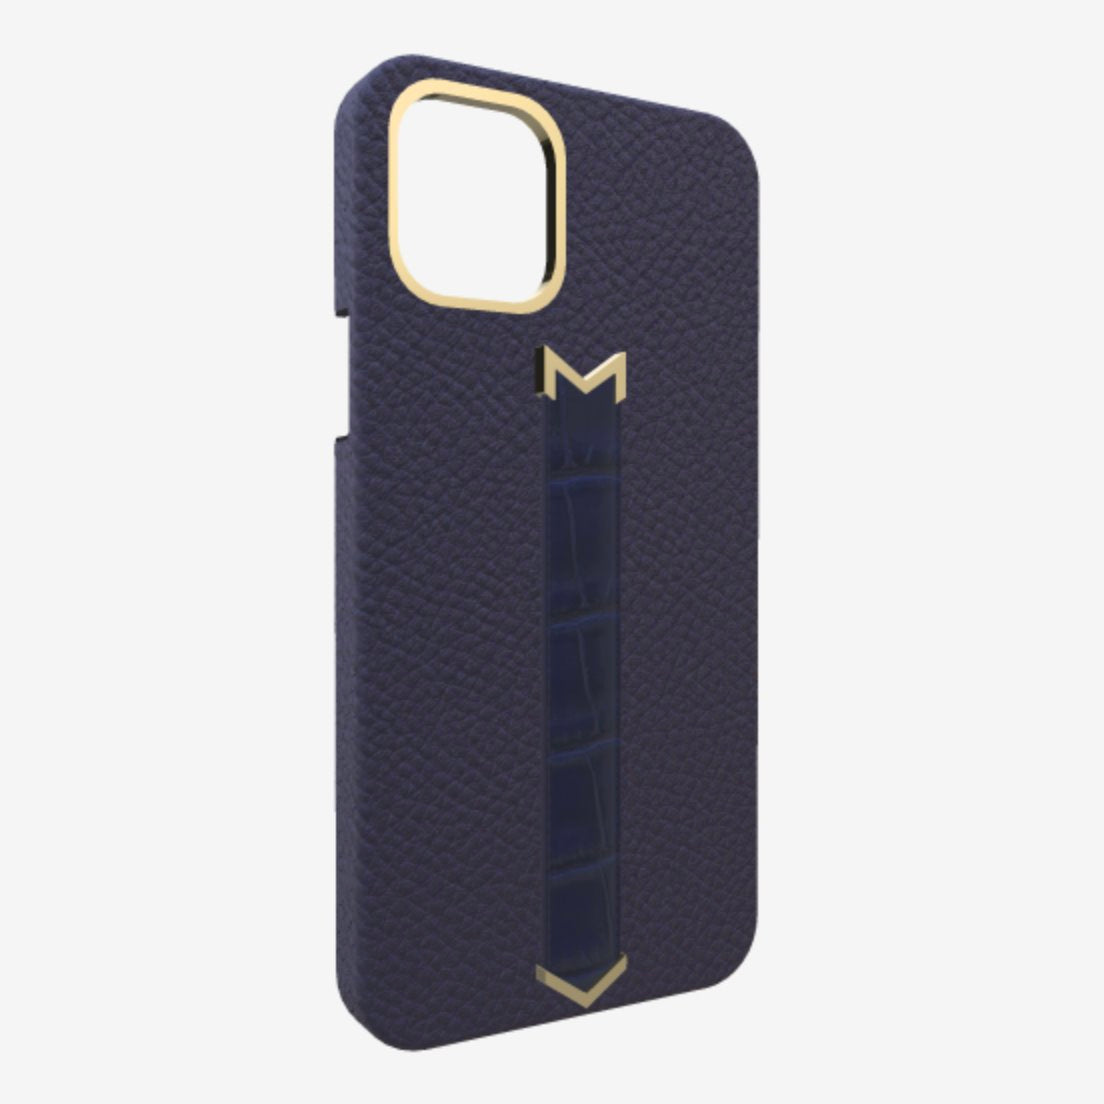 Gold Finger Strap Case for iPhone 13 in Genuine Calfskin and Alligator Navy Blue Navy Blue 